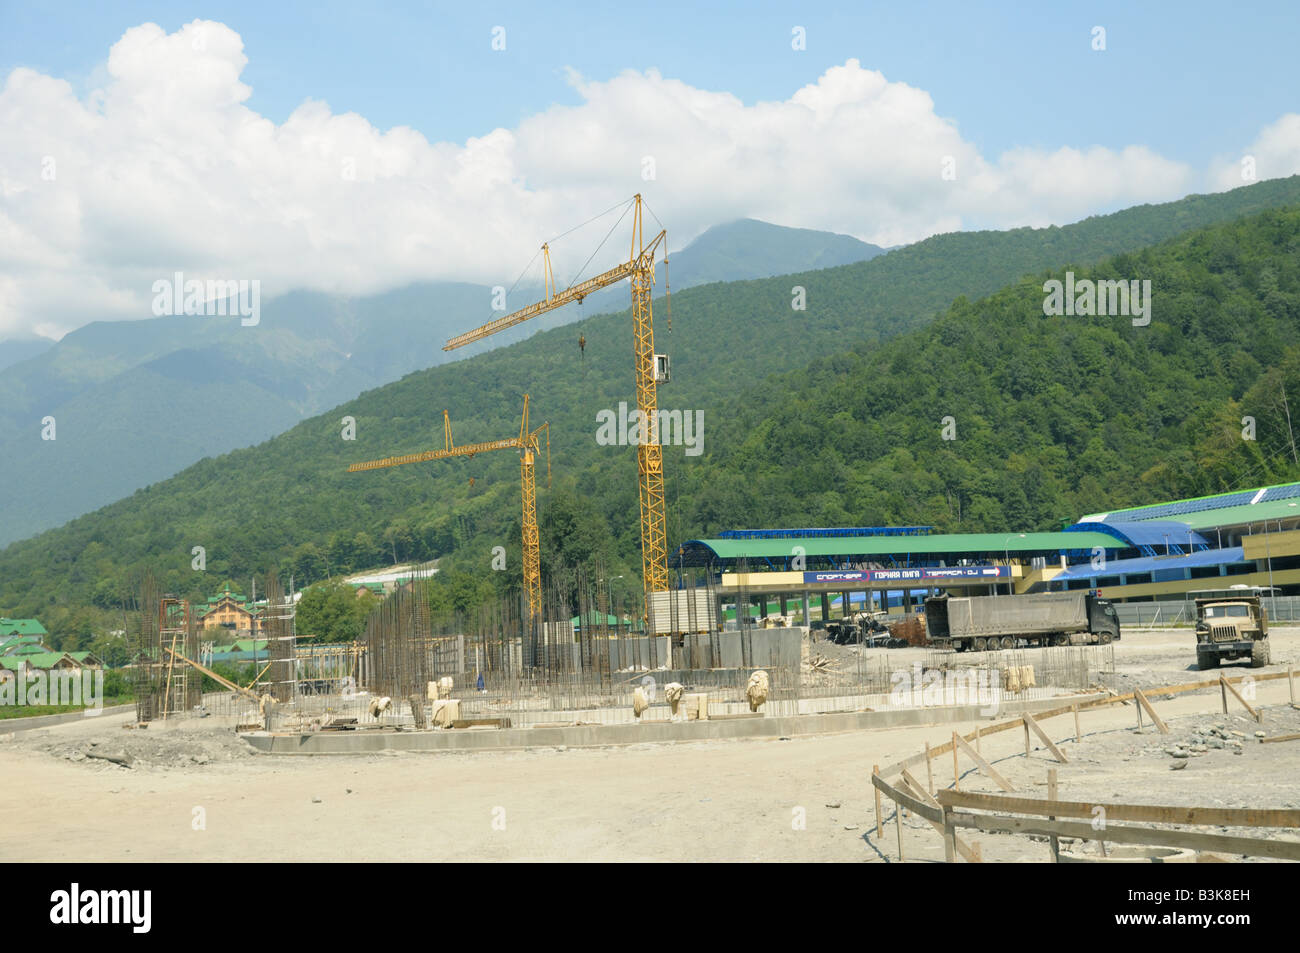 Construction of Olympic objects near Sochi, Russia Stock Photo